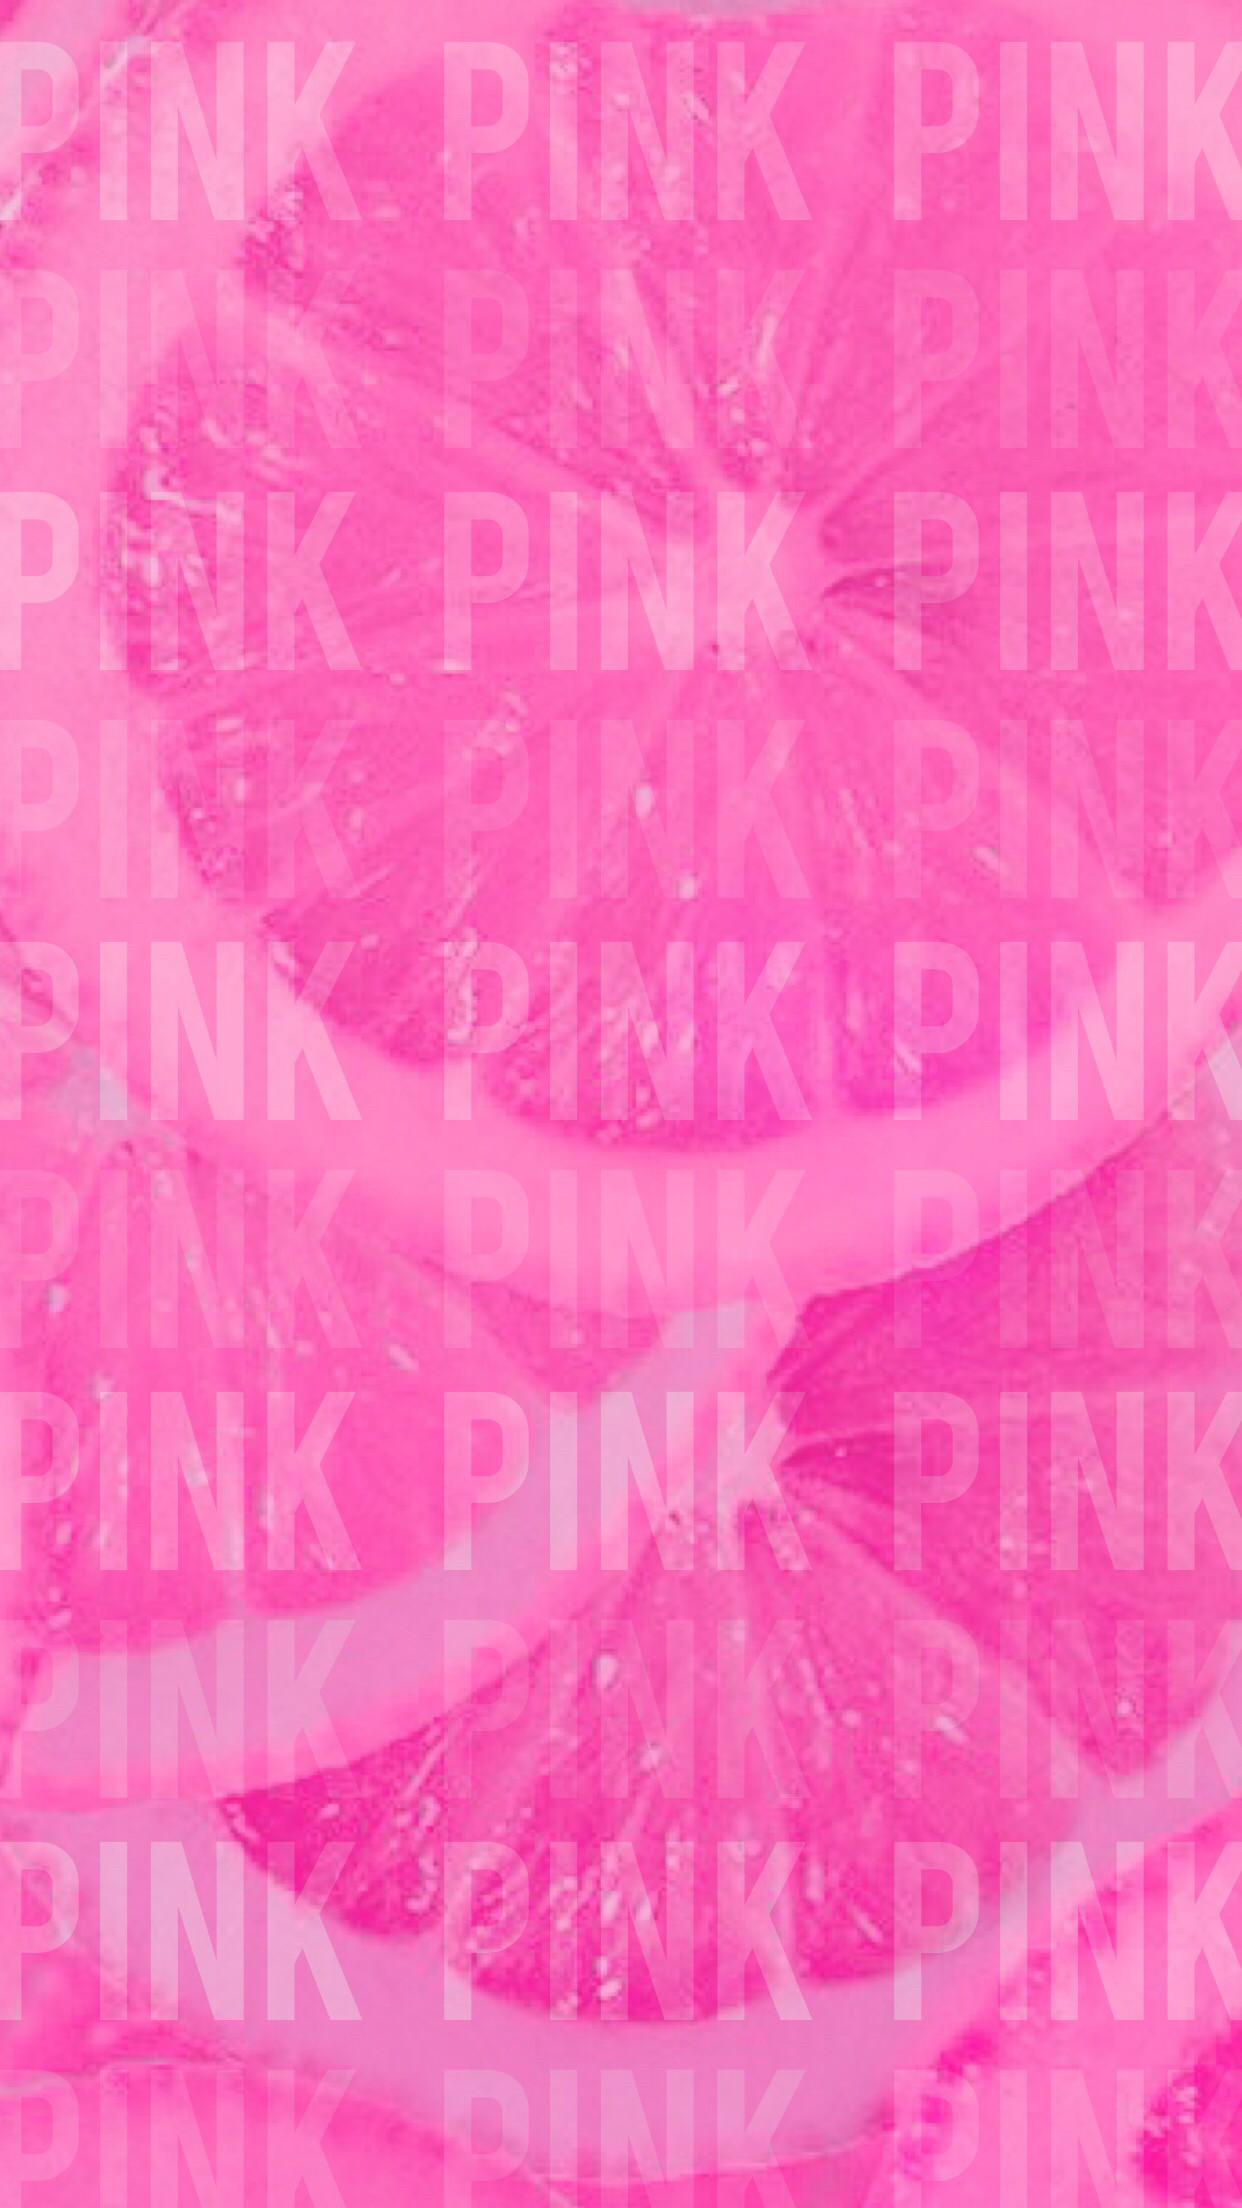 Victorias Secret PINK Wallpapers  Wallpaper Cave